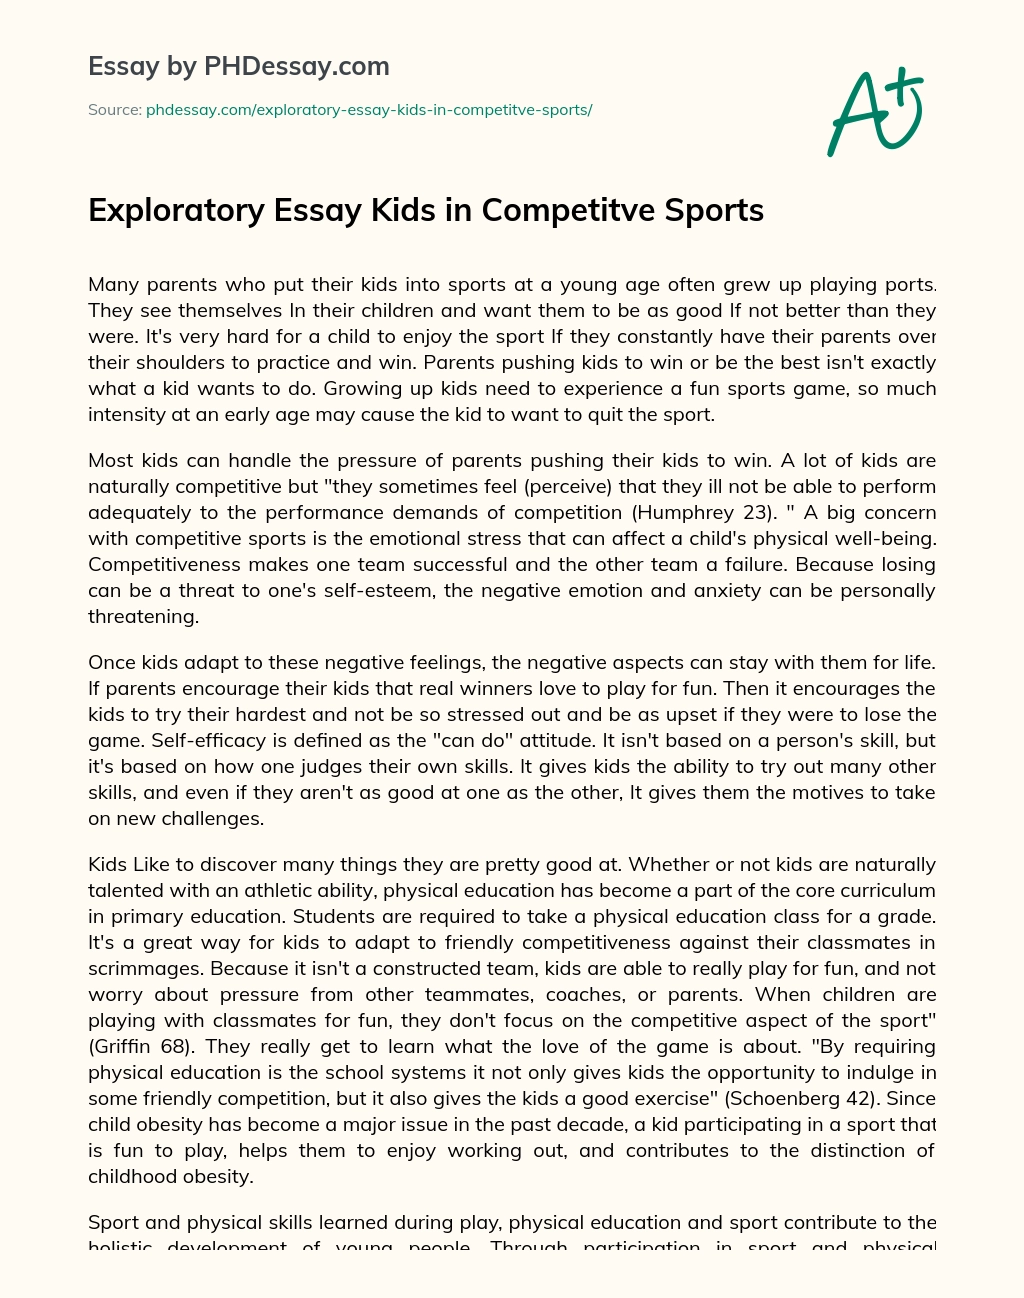 Exploratory Essay Kids in Competitve Sports essay